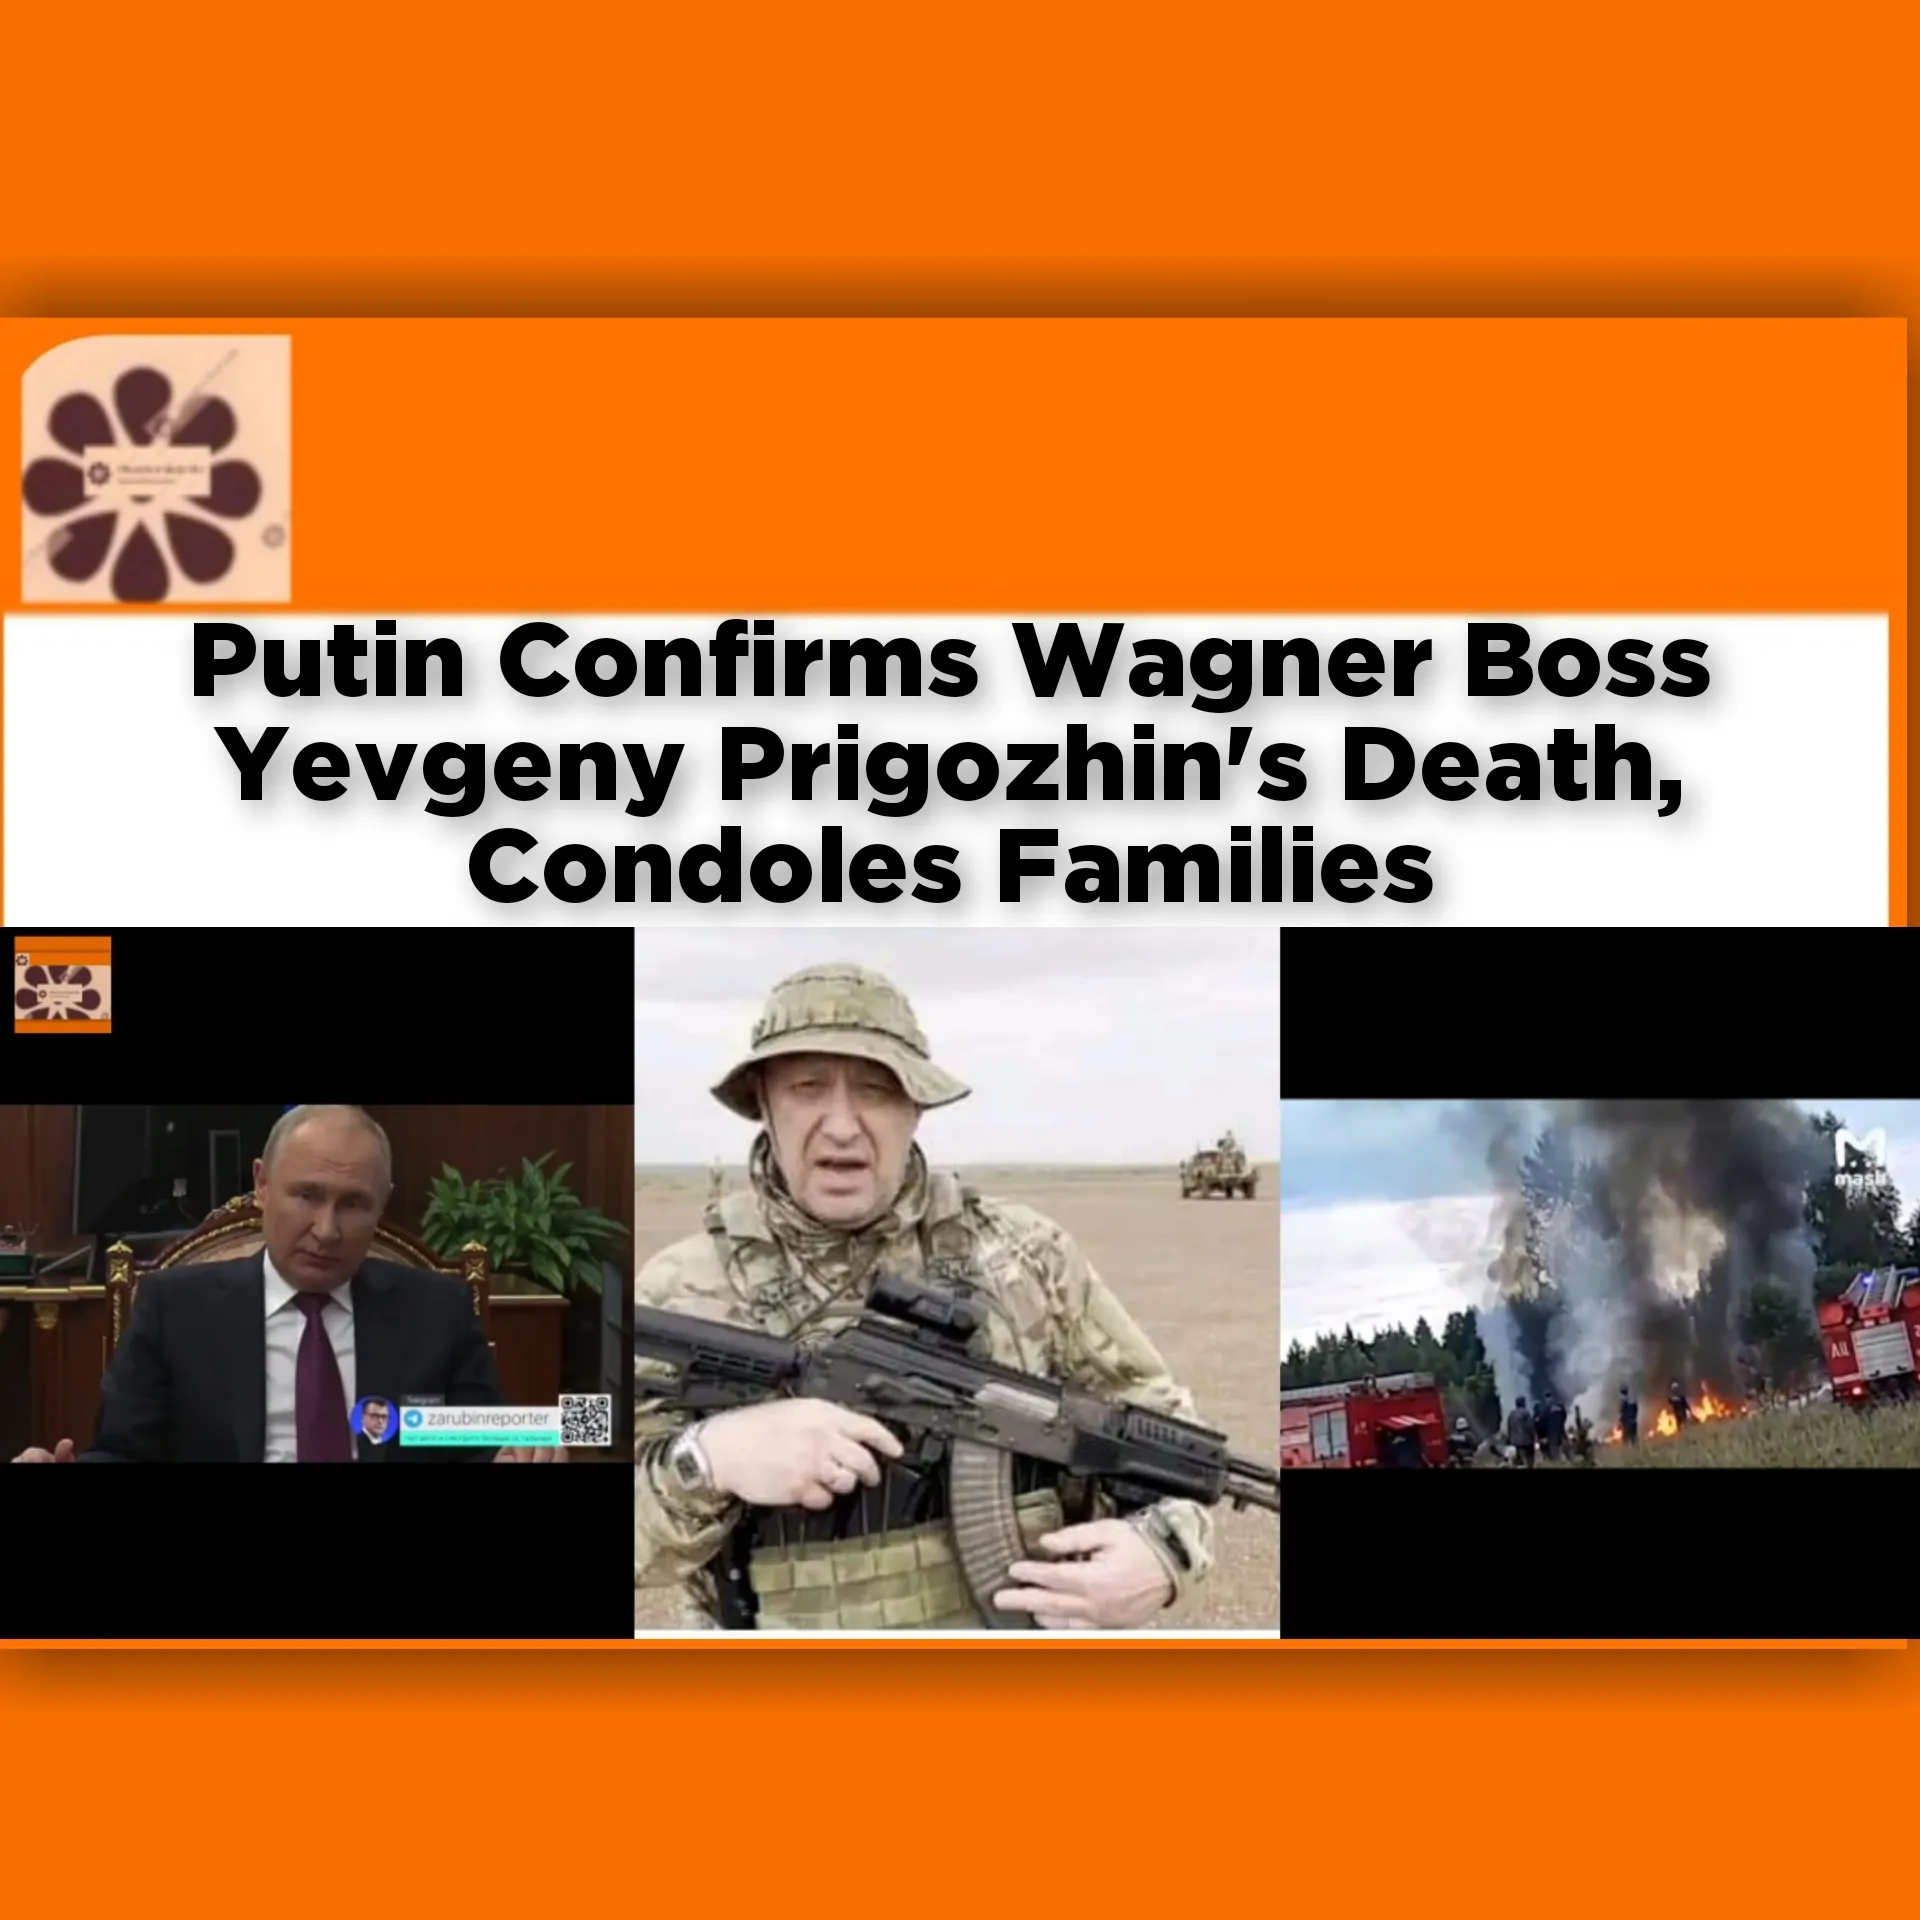 Putin Confirms Wagner Boss Yevgeny Prigozhin's Death, Condoles Families ~ OsazuwaAkonedo #PlaneCrash #Prigozhin #Putin #Russia #Vladimir #Wagner #Yevgeny